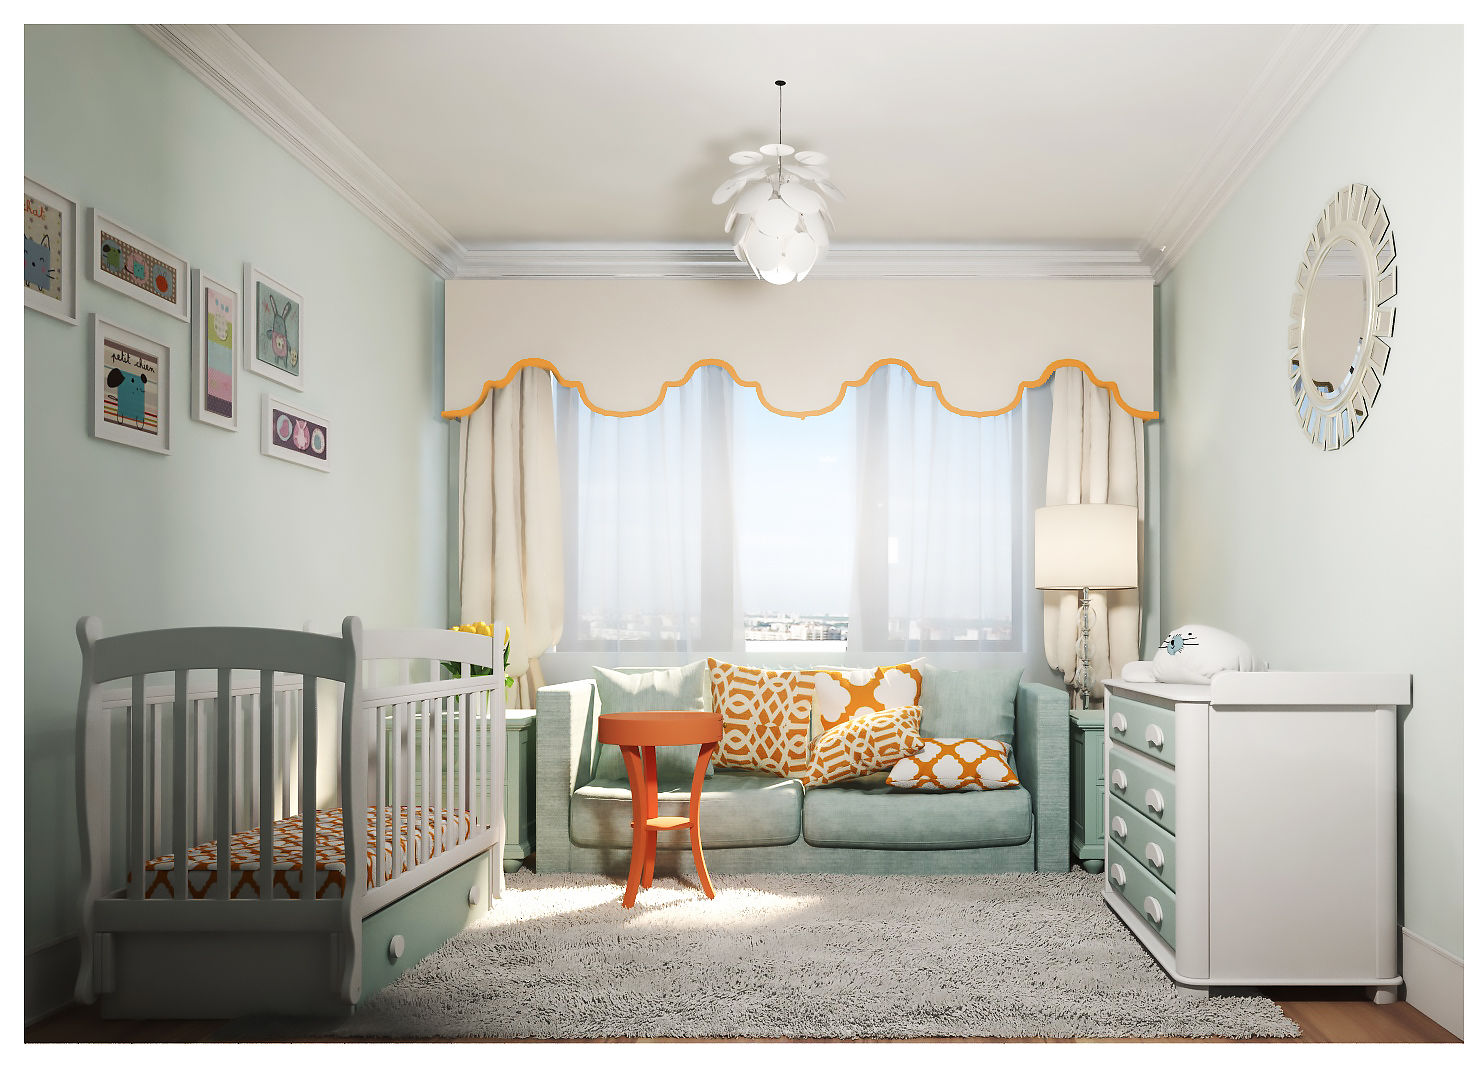 3-bedroom Apartment, Moscow , Alexander Krivov Alexander Krivov Classic style nursery/kids room